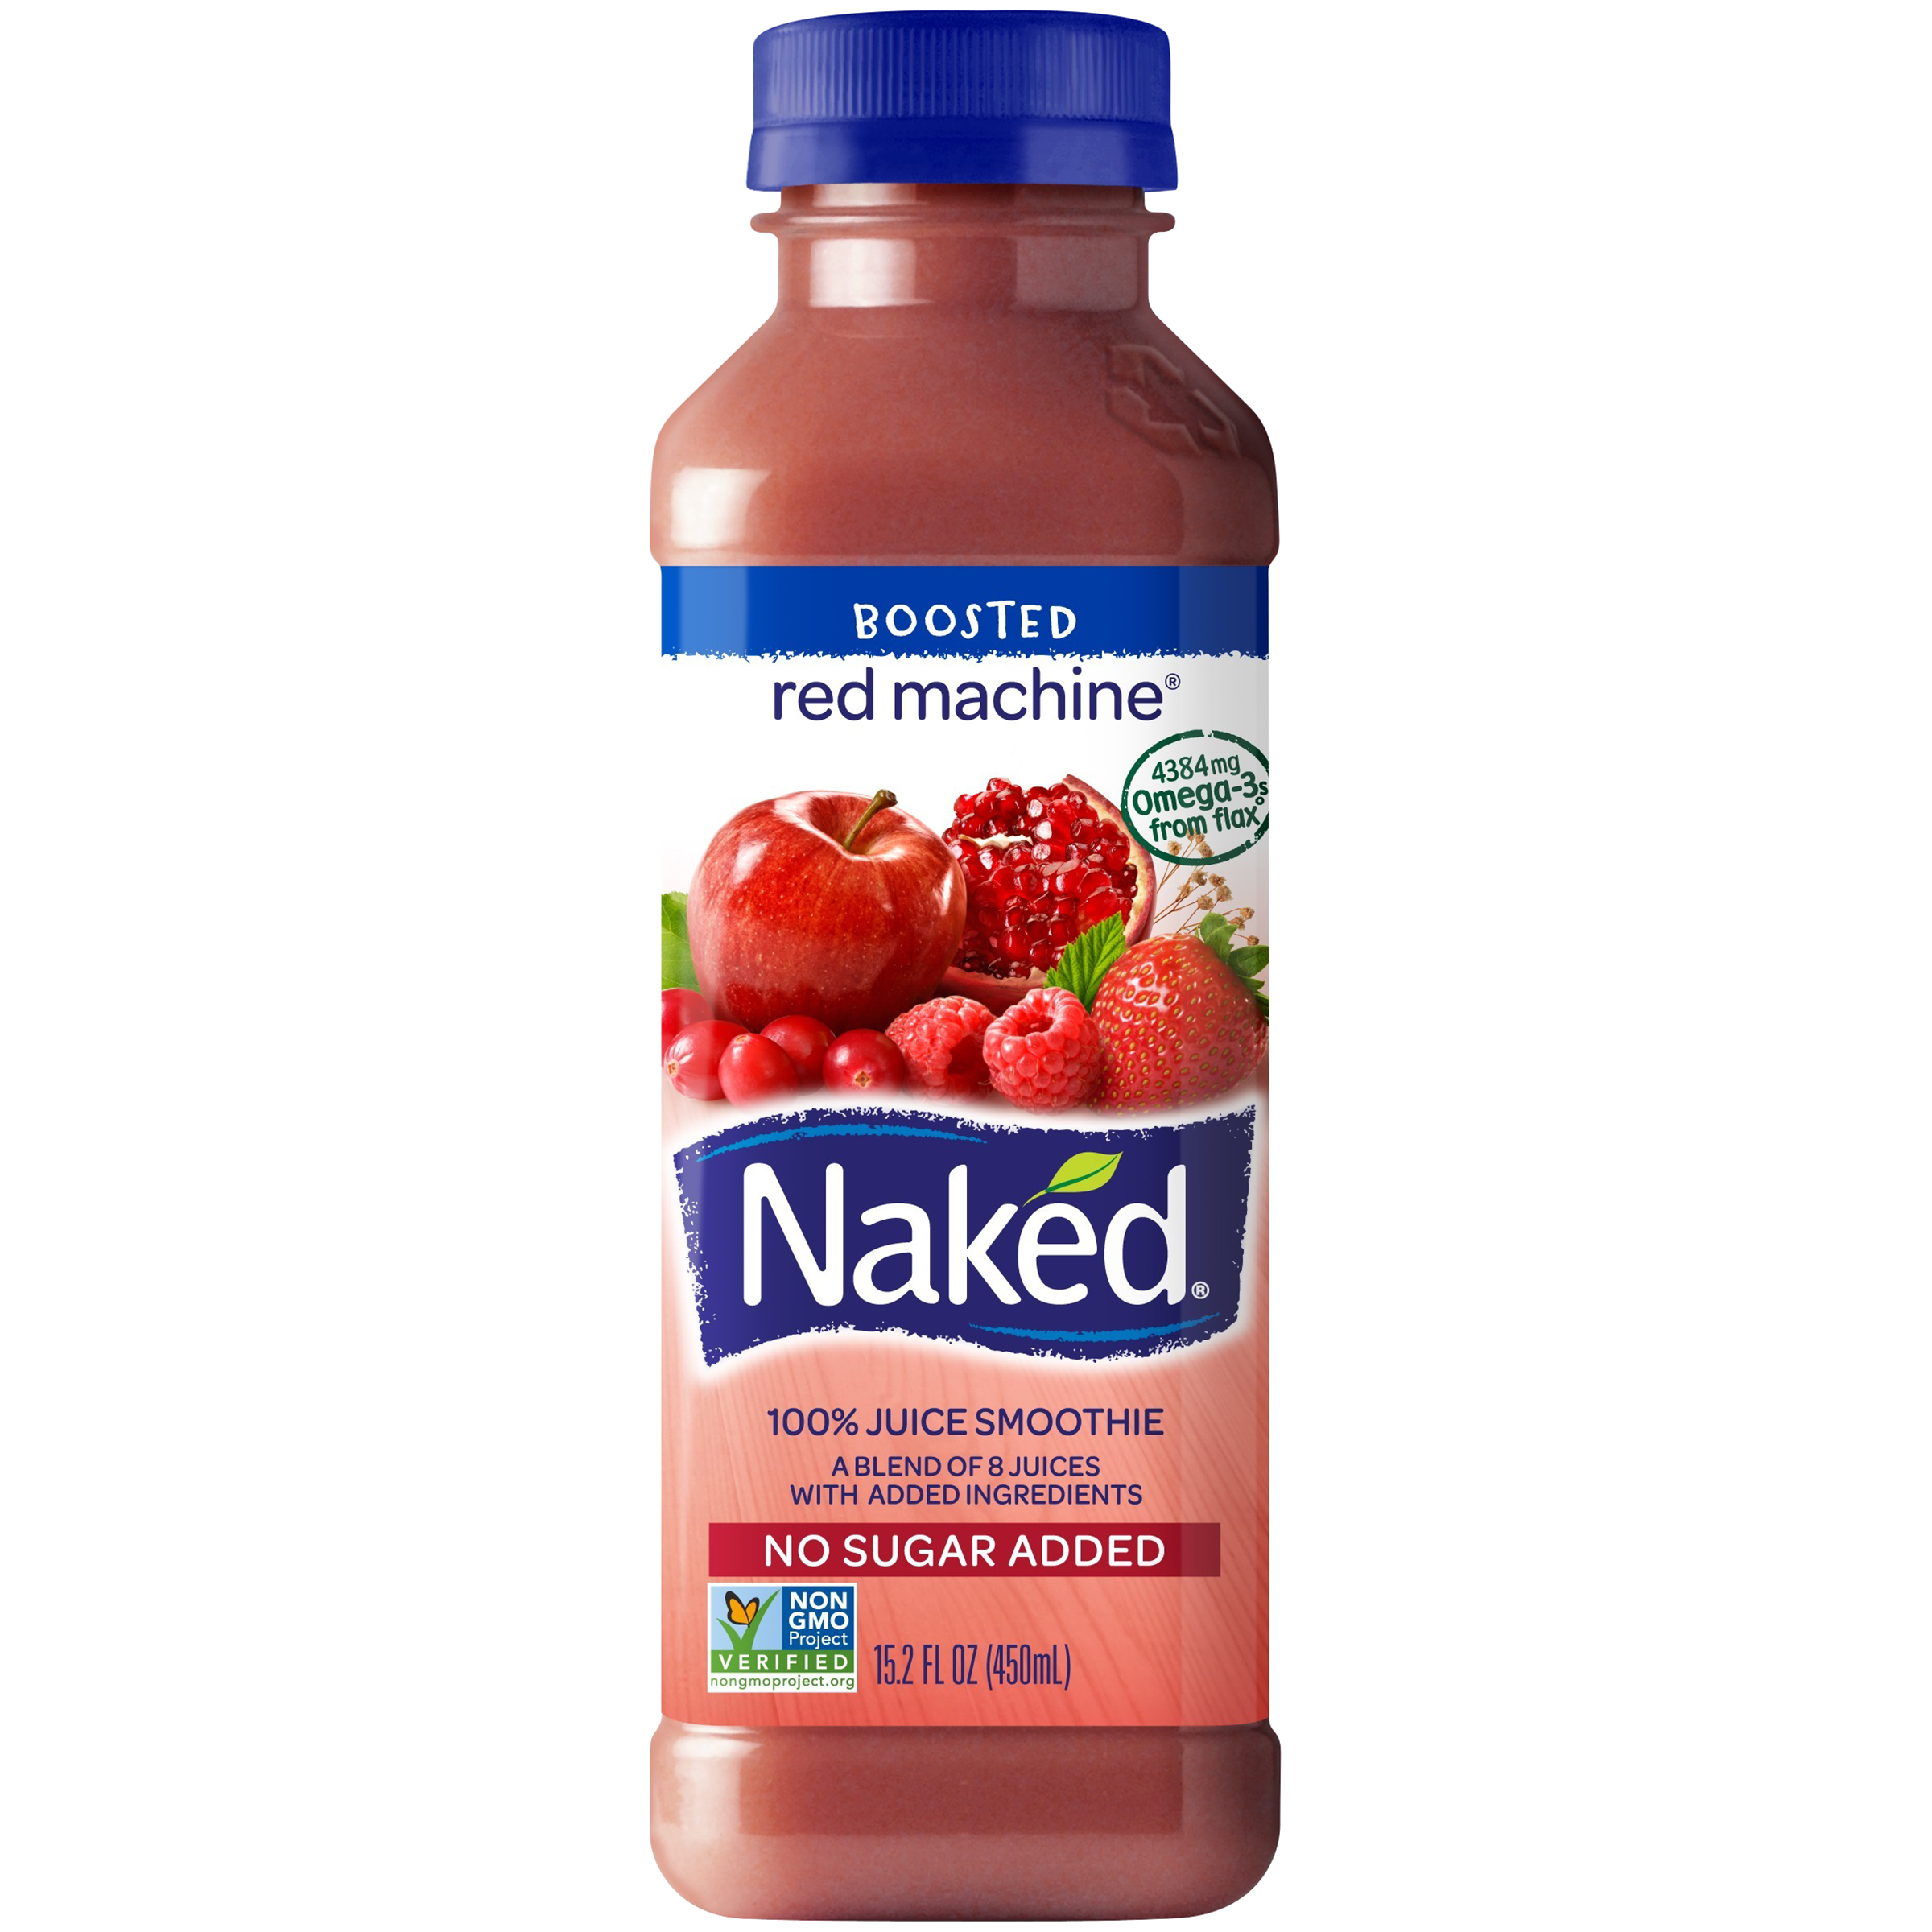 Naked Juice Berry Blast